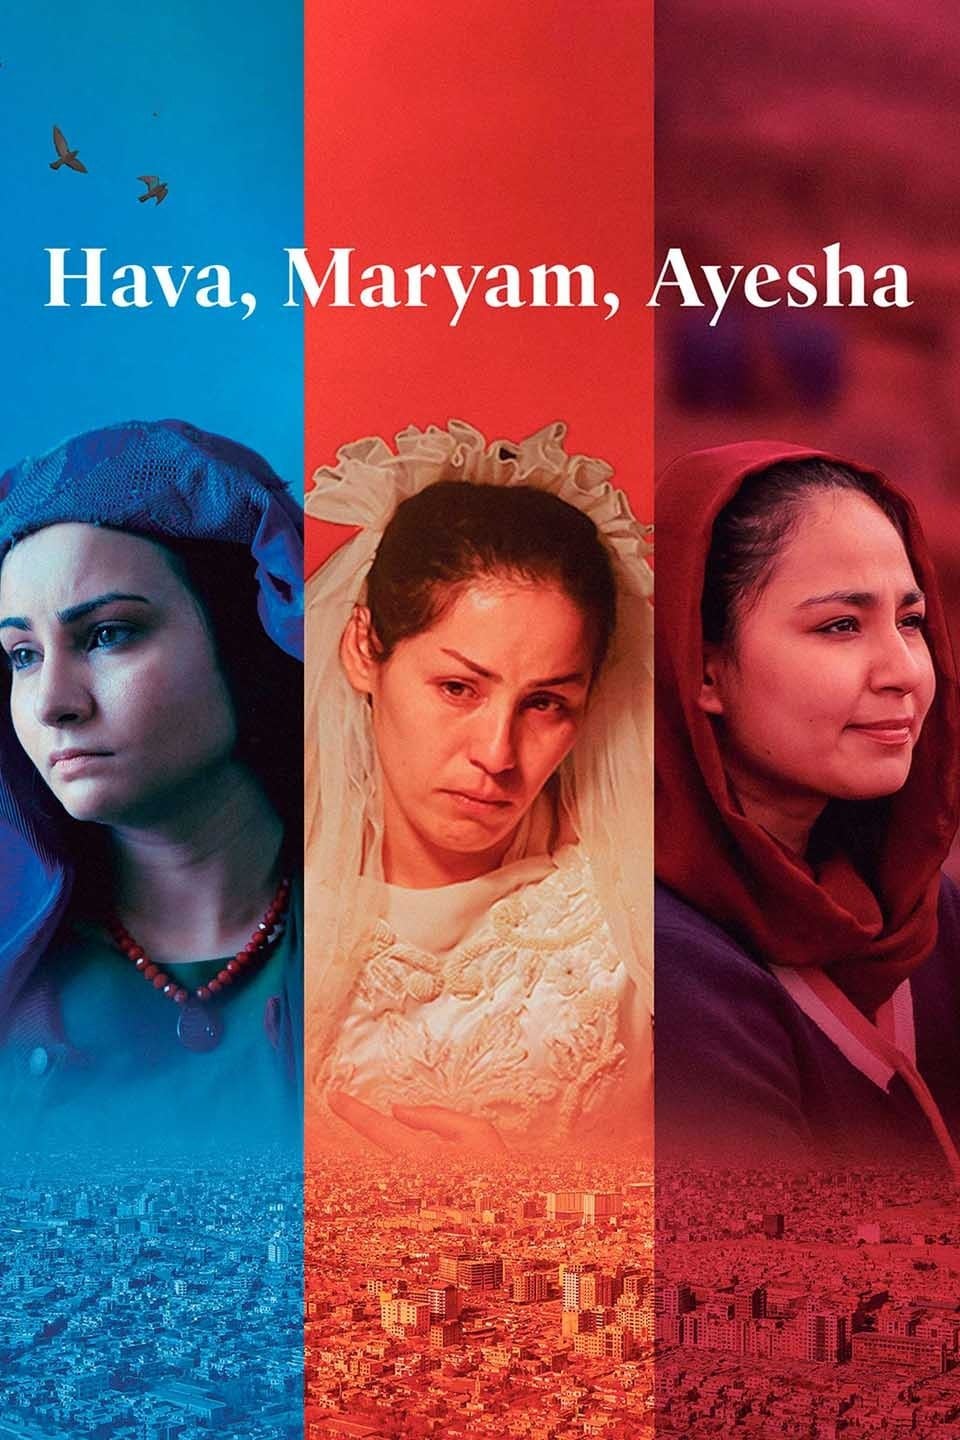 The Hava, Maryam, Ayesha movie poster